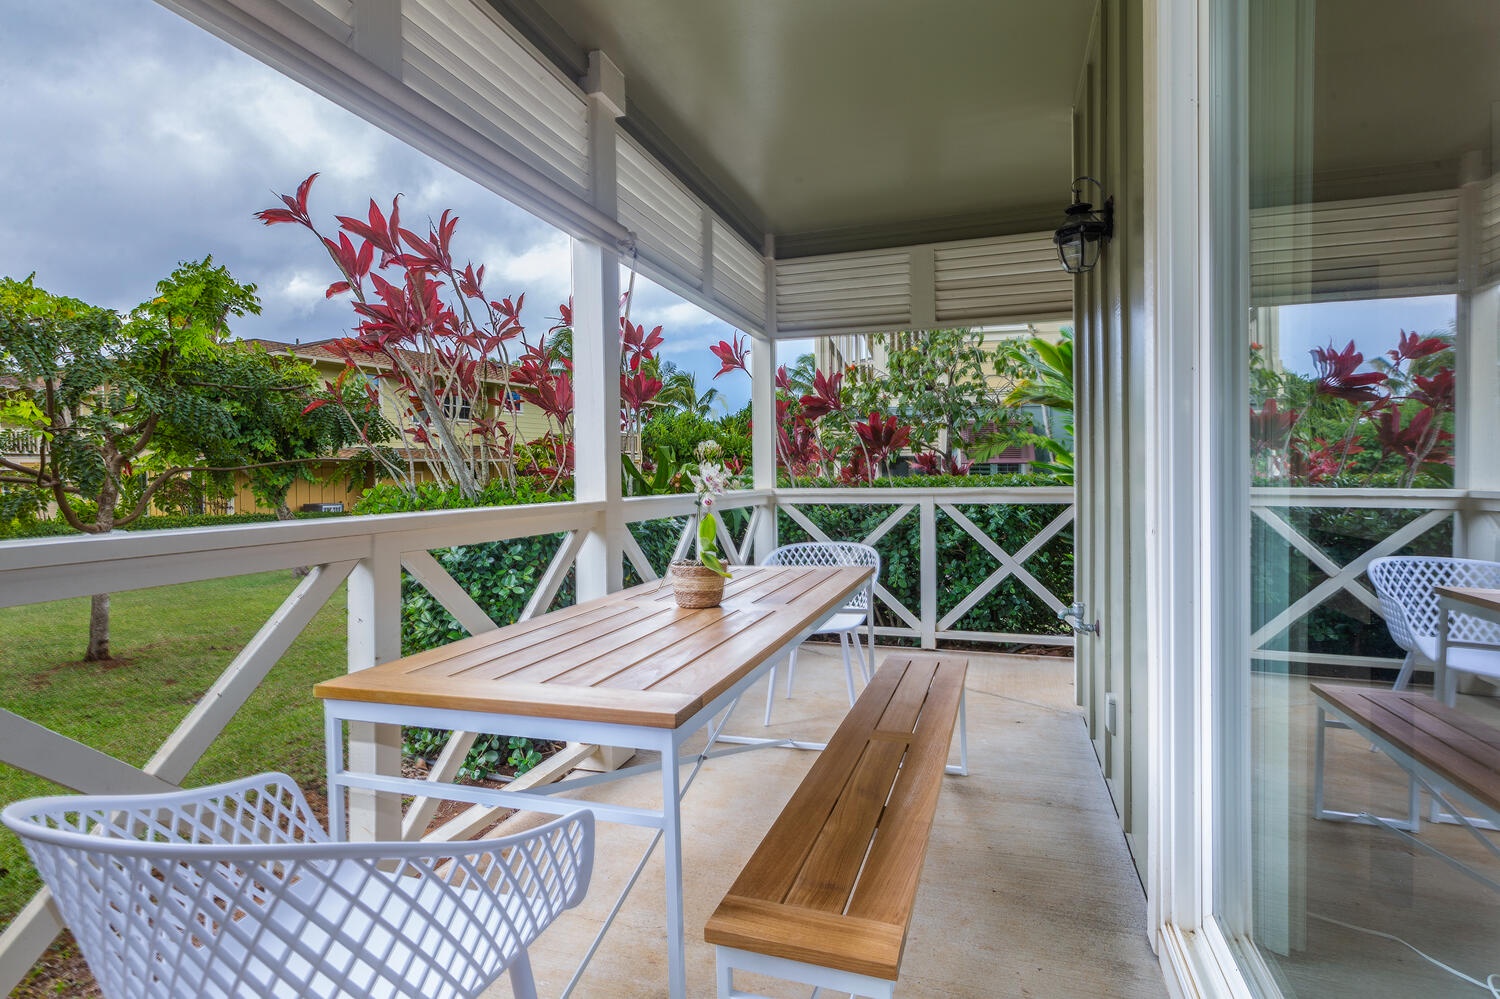 Princeville Vacation Rentals, Leilani Villa - Private Lanai with outdoor furniture